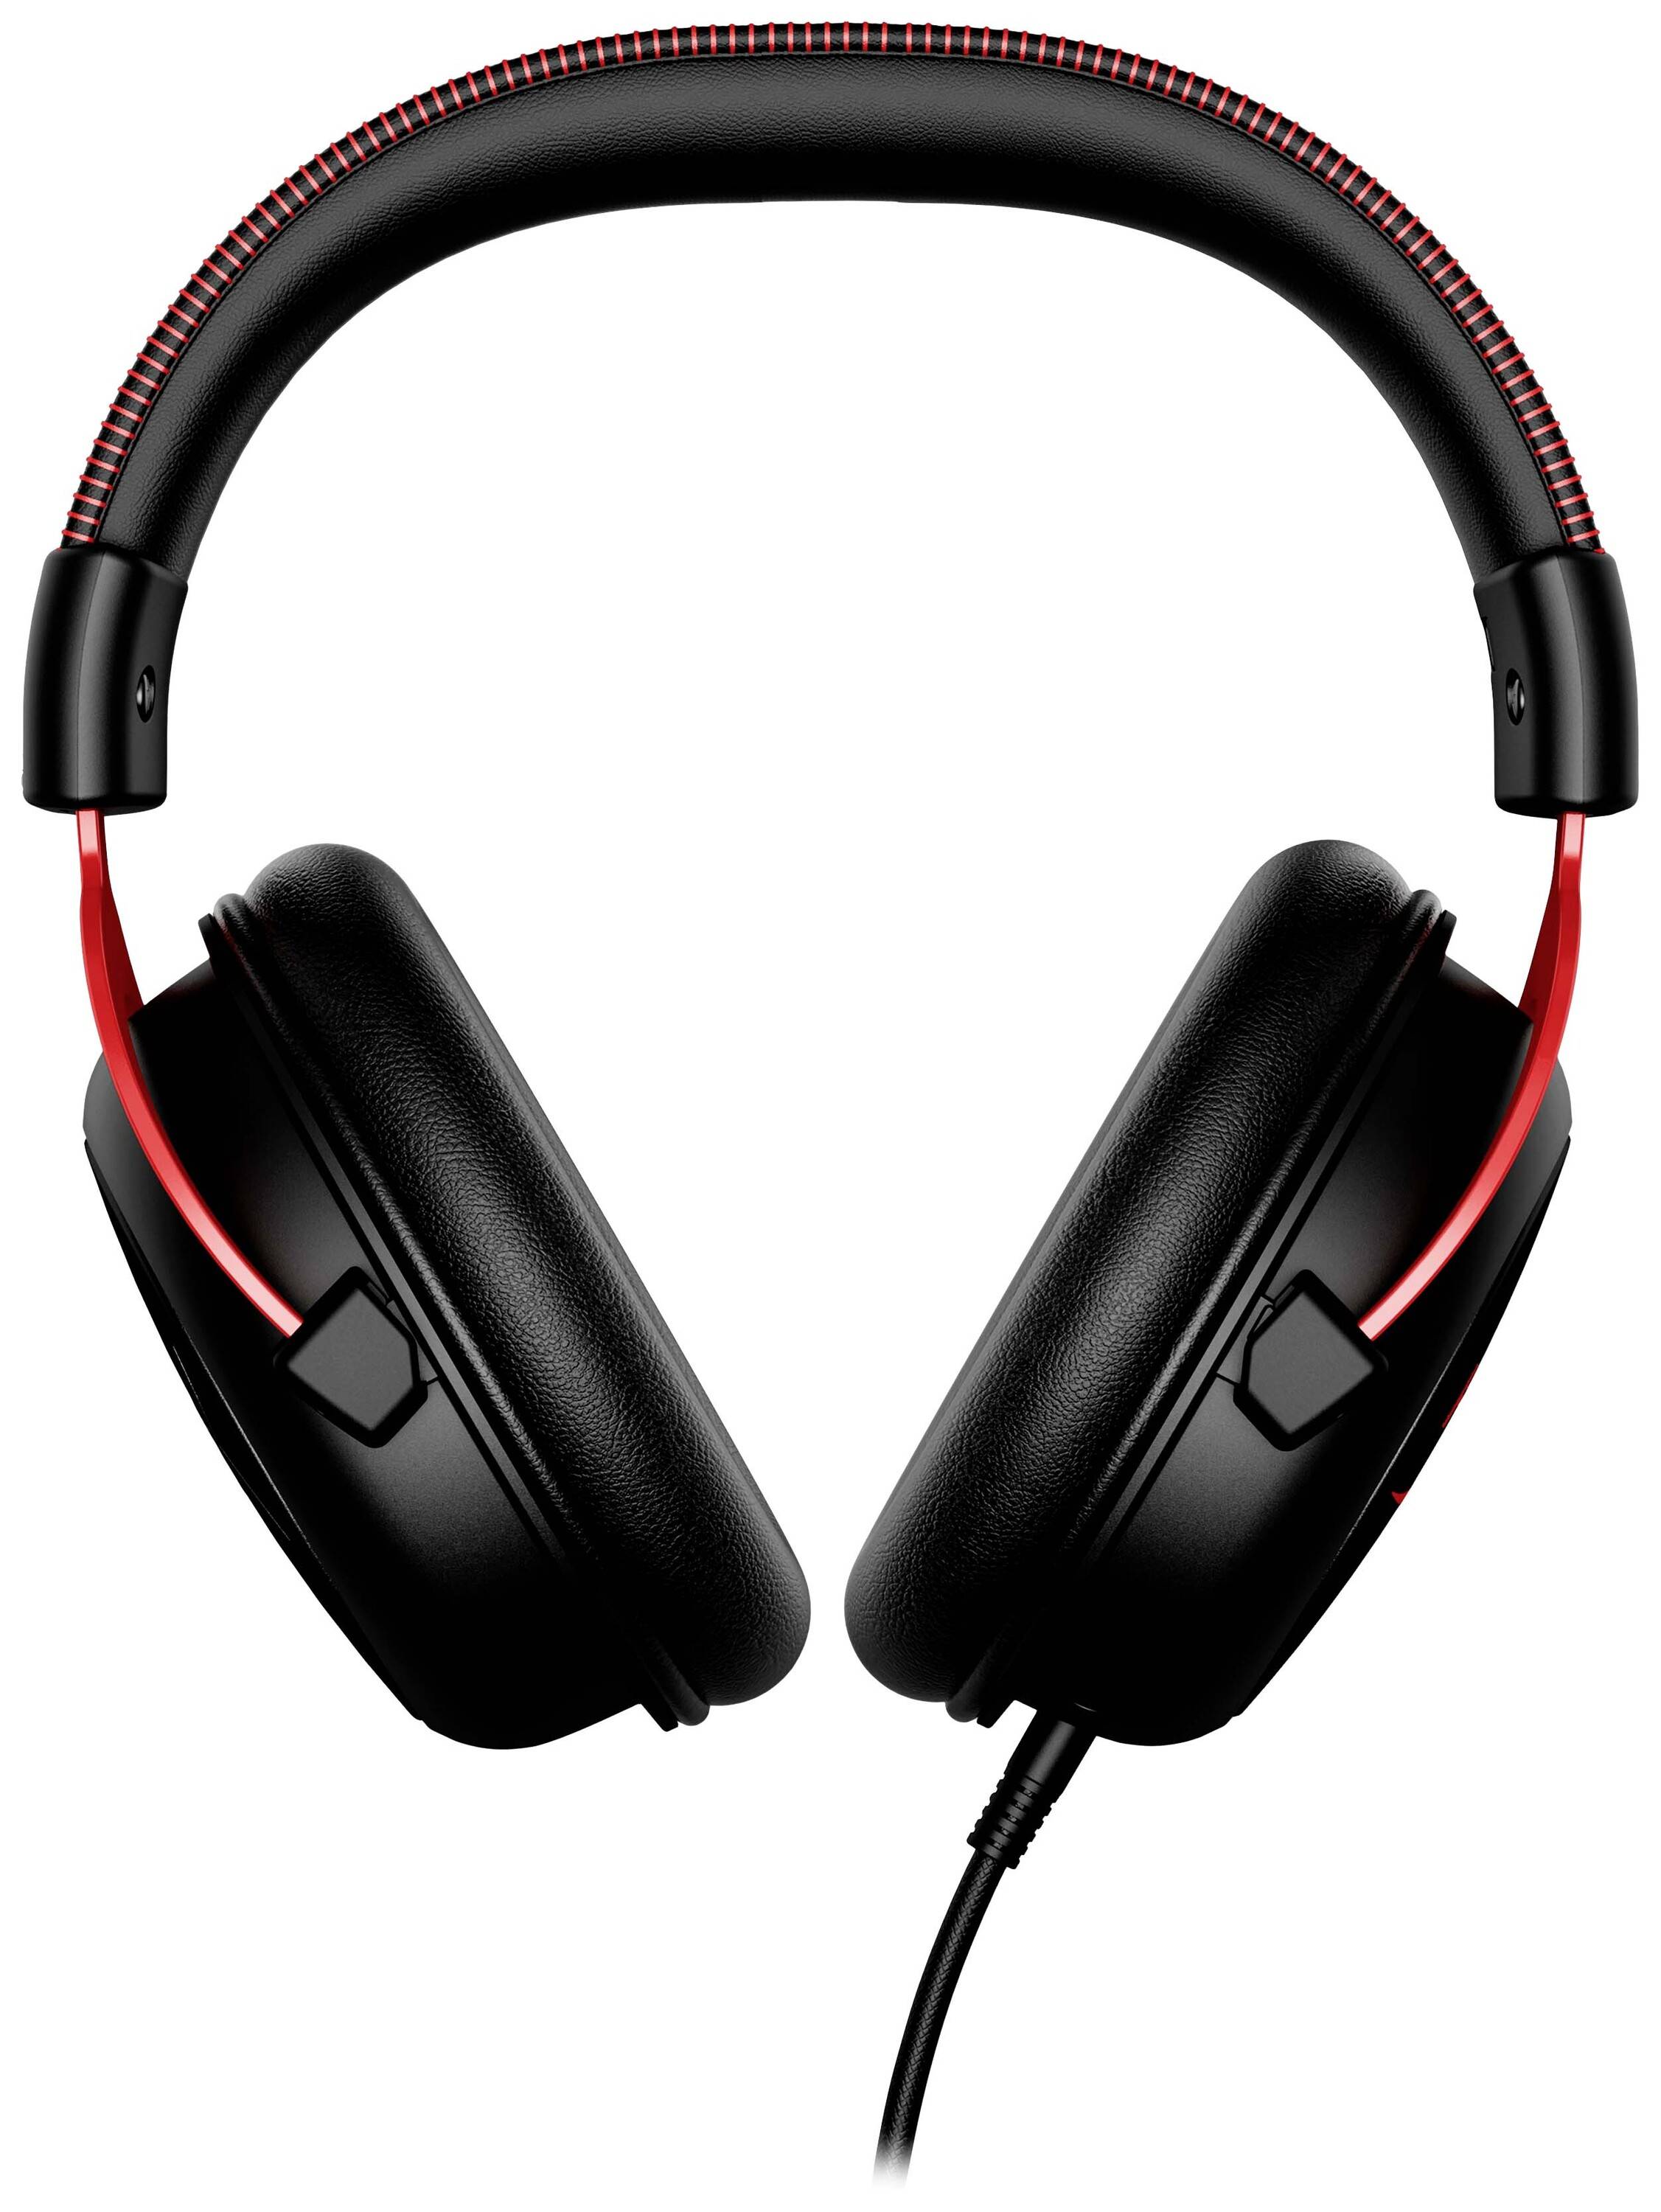 KINGSTON HyperX Cloud II Red Gaming Over Ear Headset kabelgebunden Stereo Schwarz/Rot